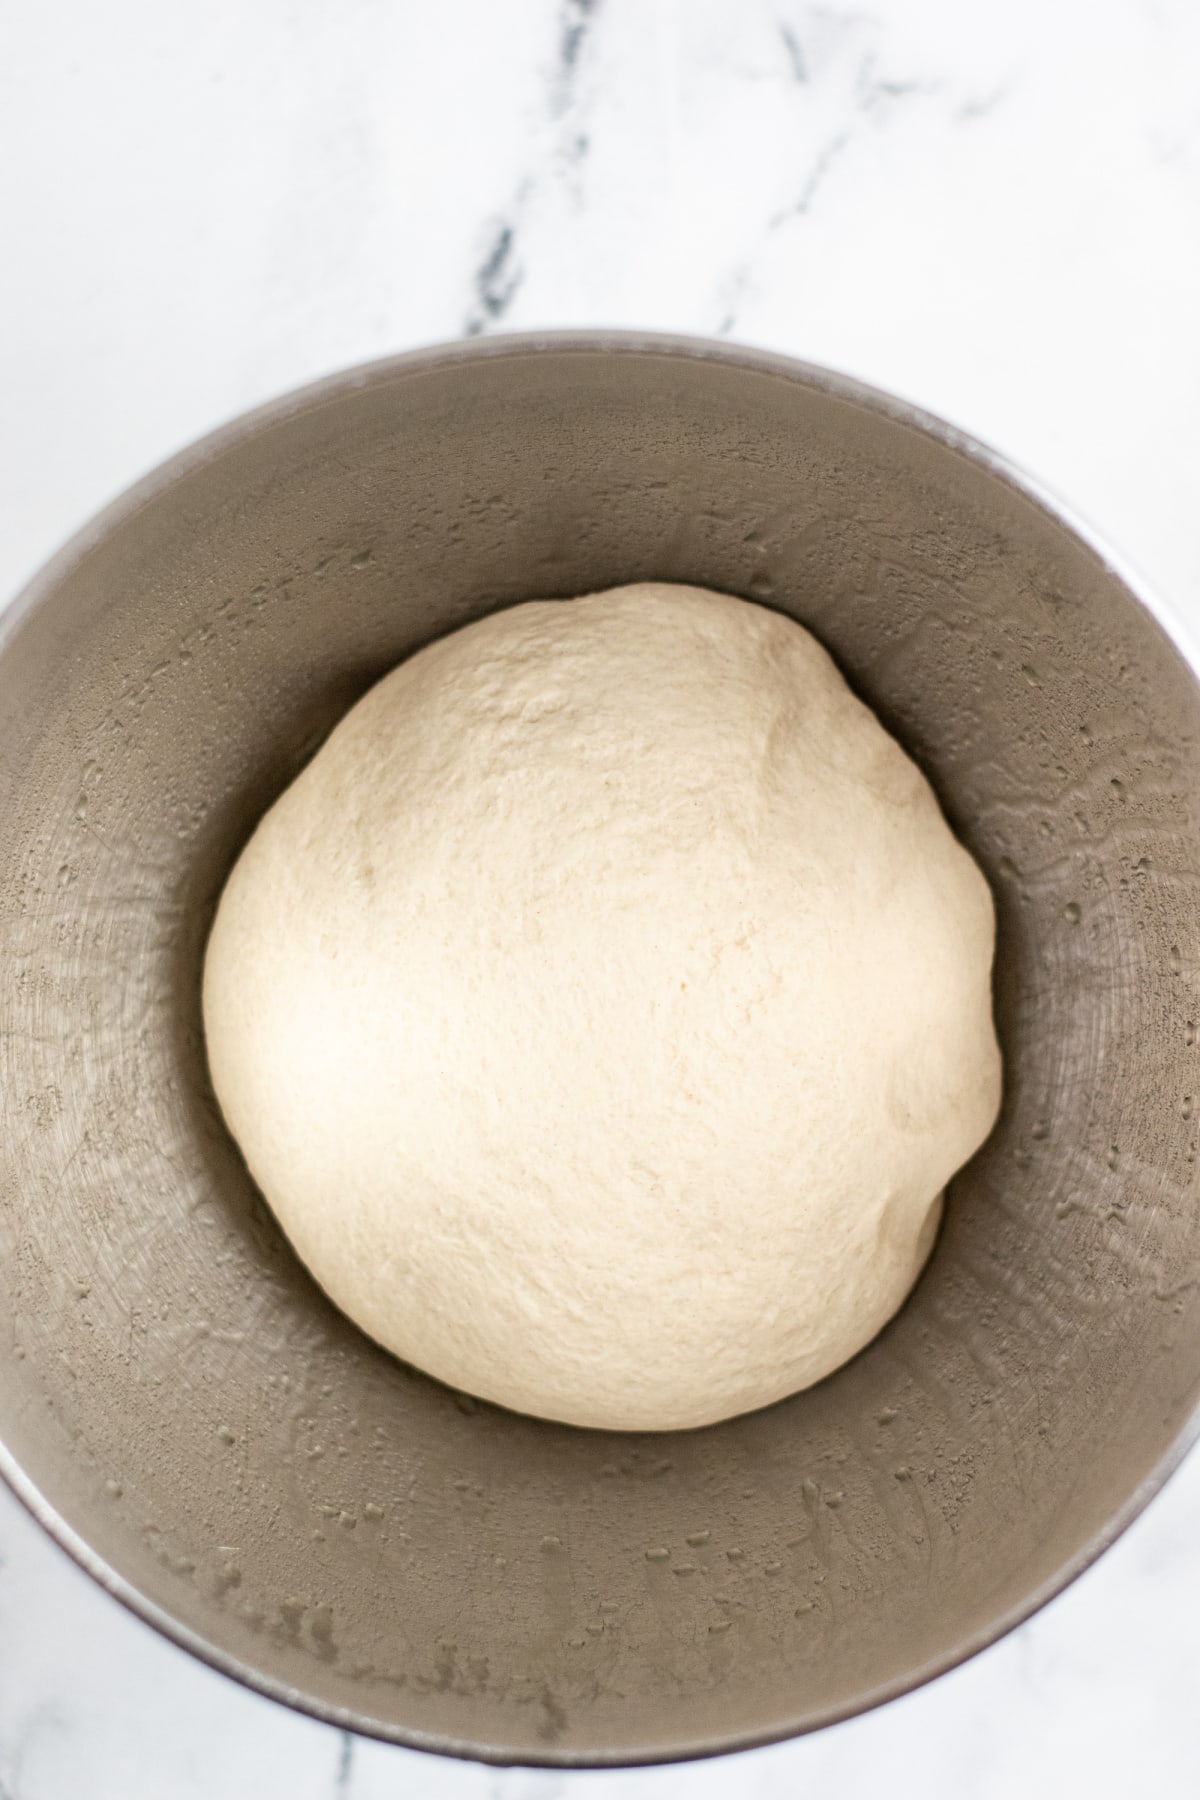 Pretzel dog dough in bowl